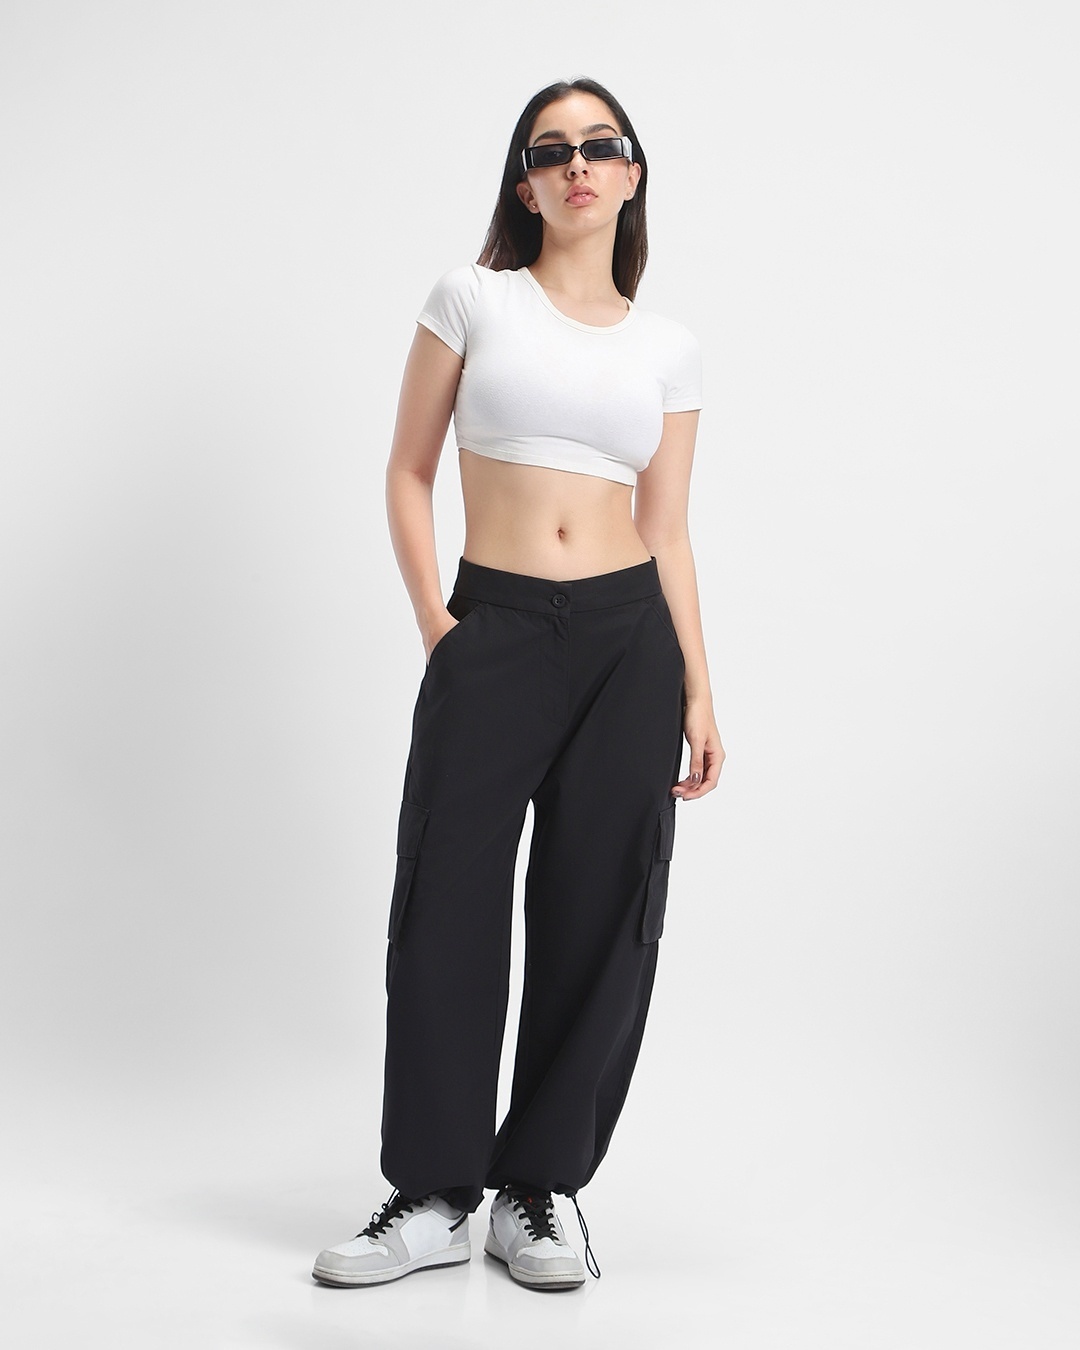 Buy Moda Rapido Women Solid Slim Fit Cargo Trousers  Trousers for Women  10259673  Myntra